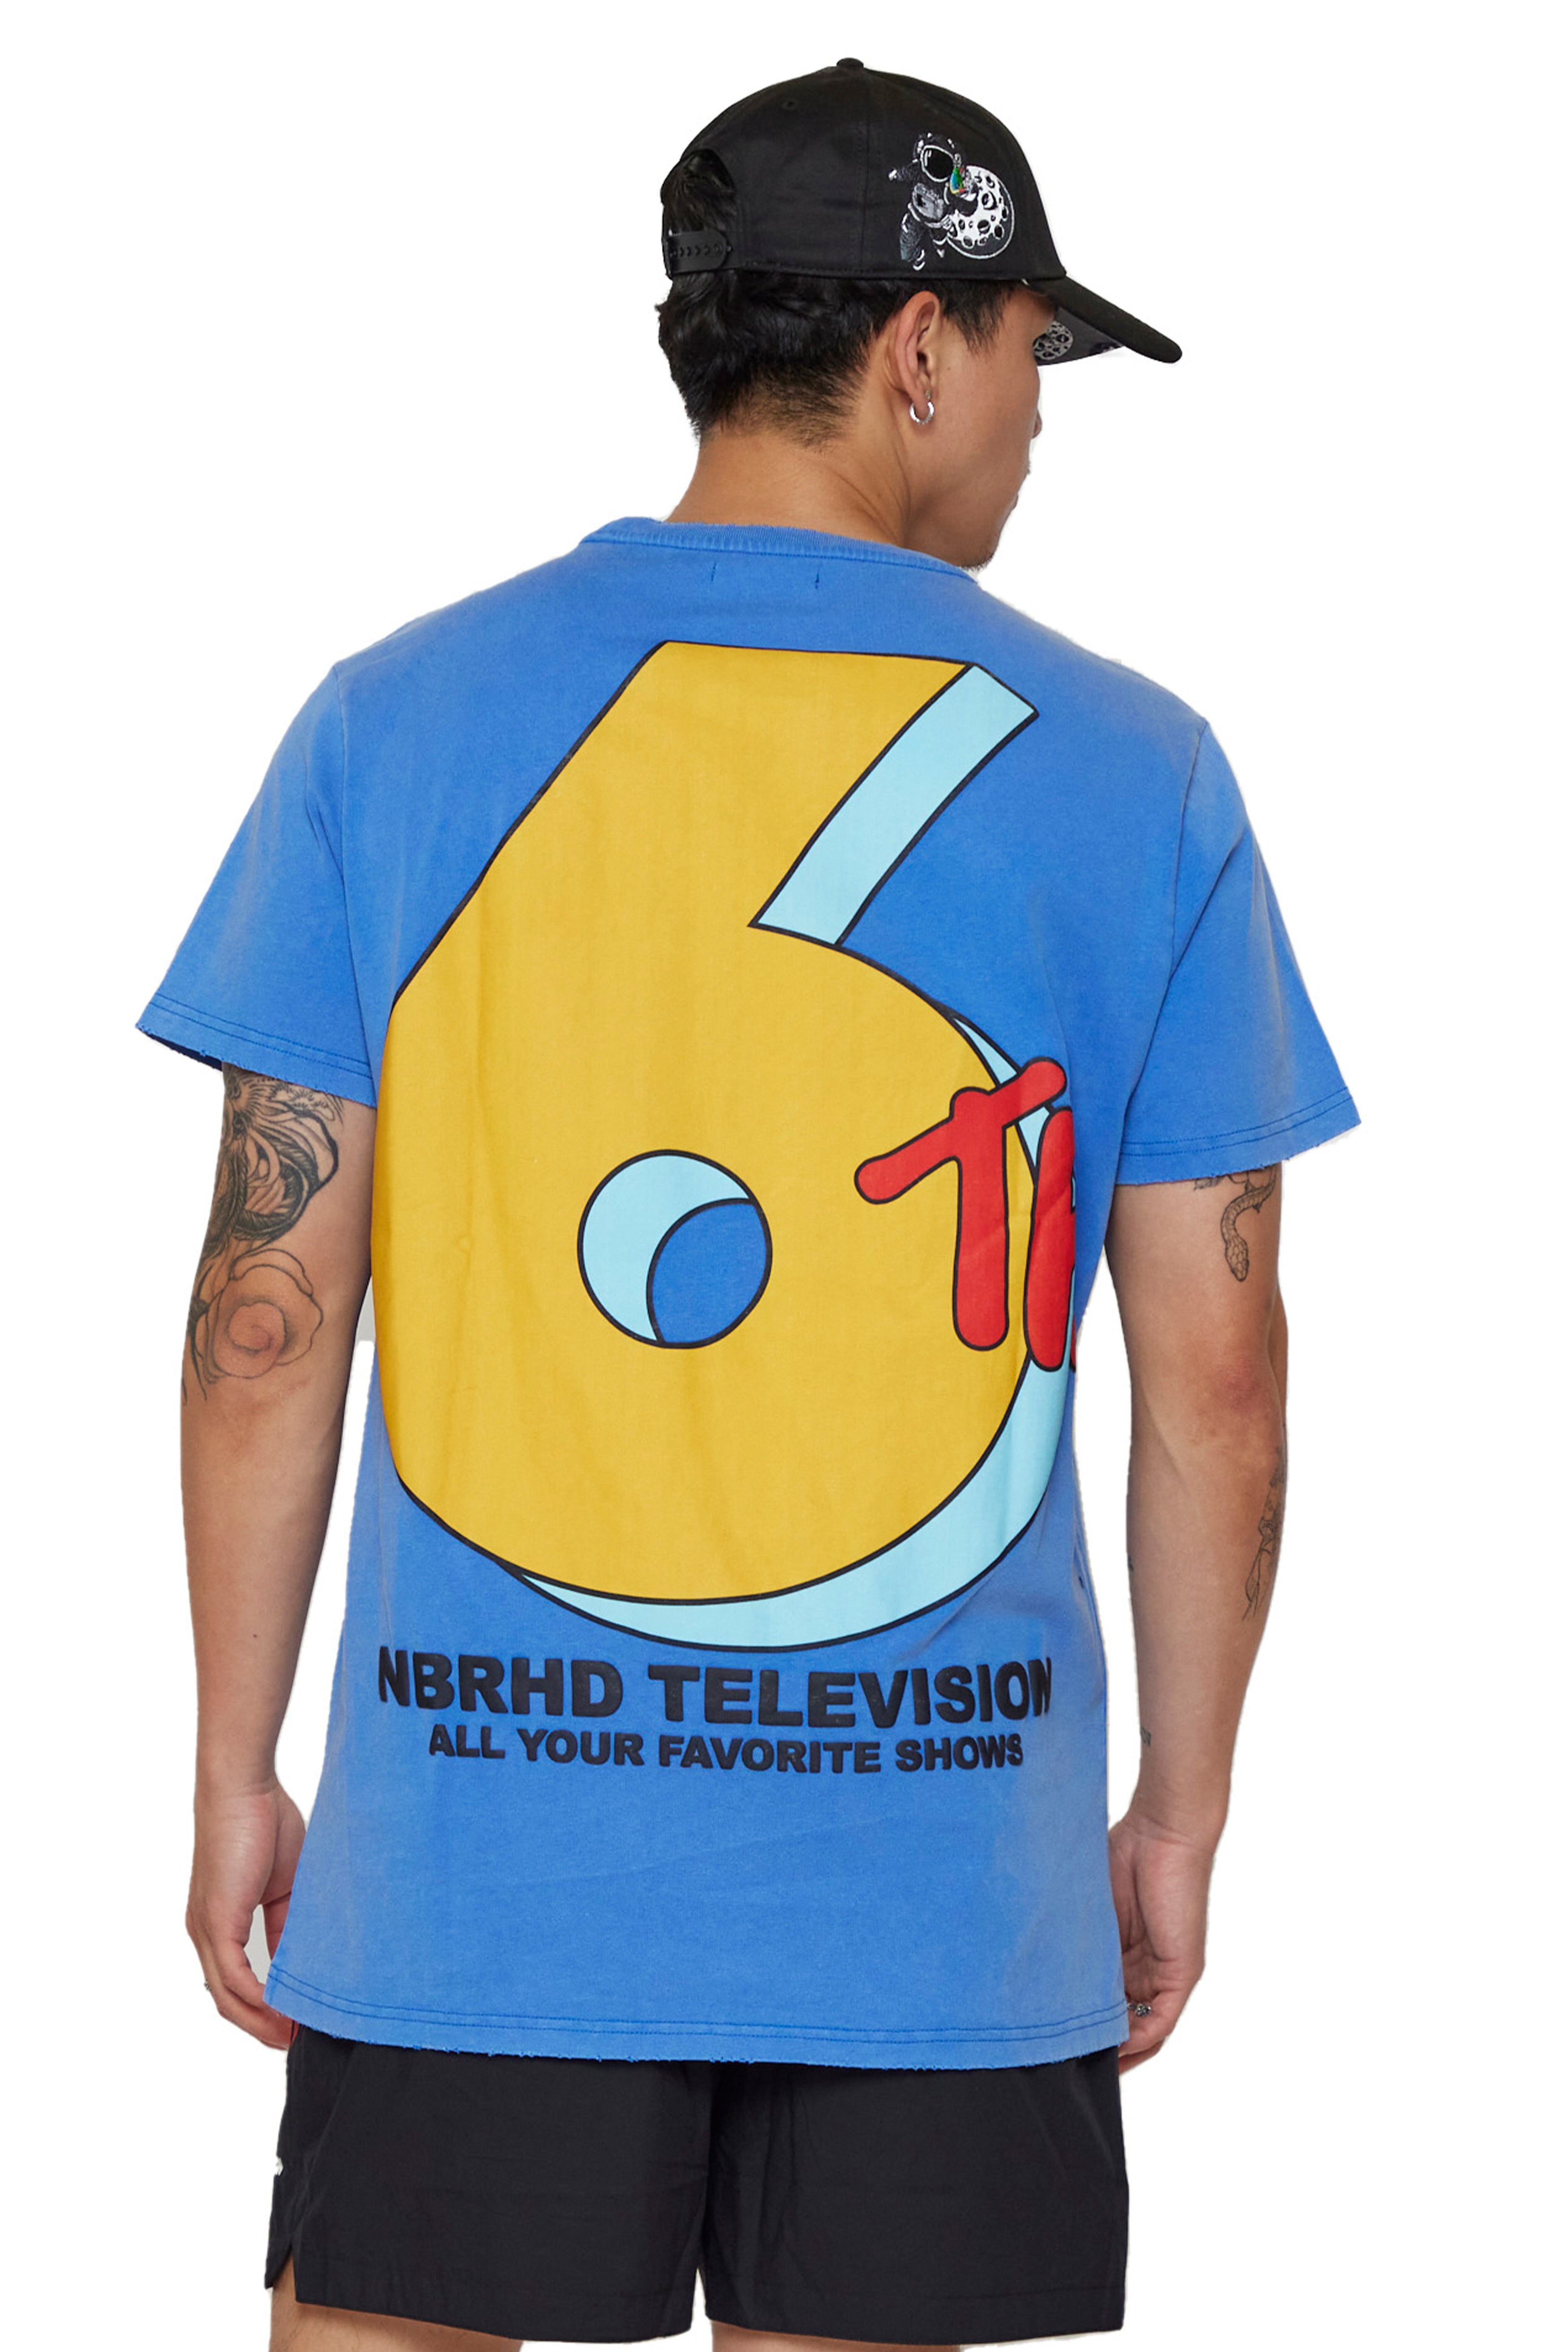 6thNBRHD TEES "NBRHD TELEVISION" LIGHT BLUE